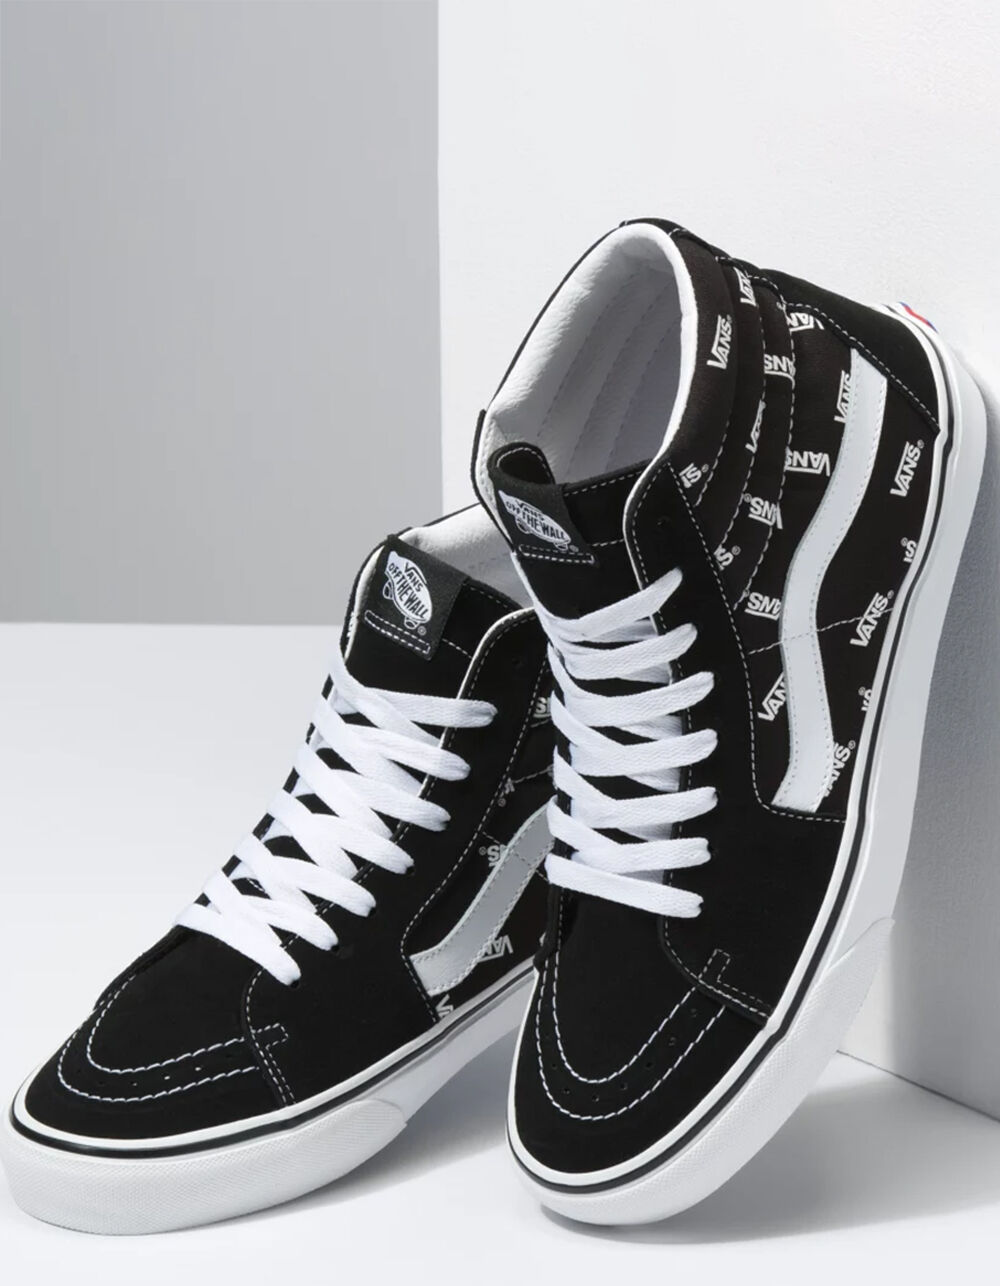 VANS Sk8-Hi Black & True White Shoes - BLKWH - VN0A32QGQW7